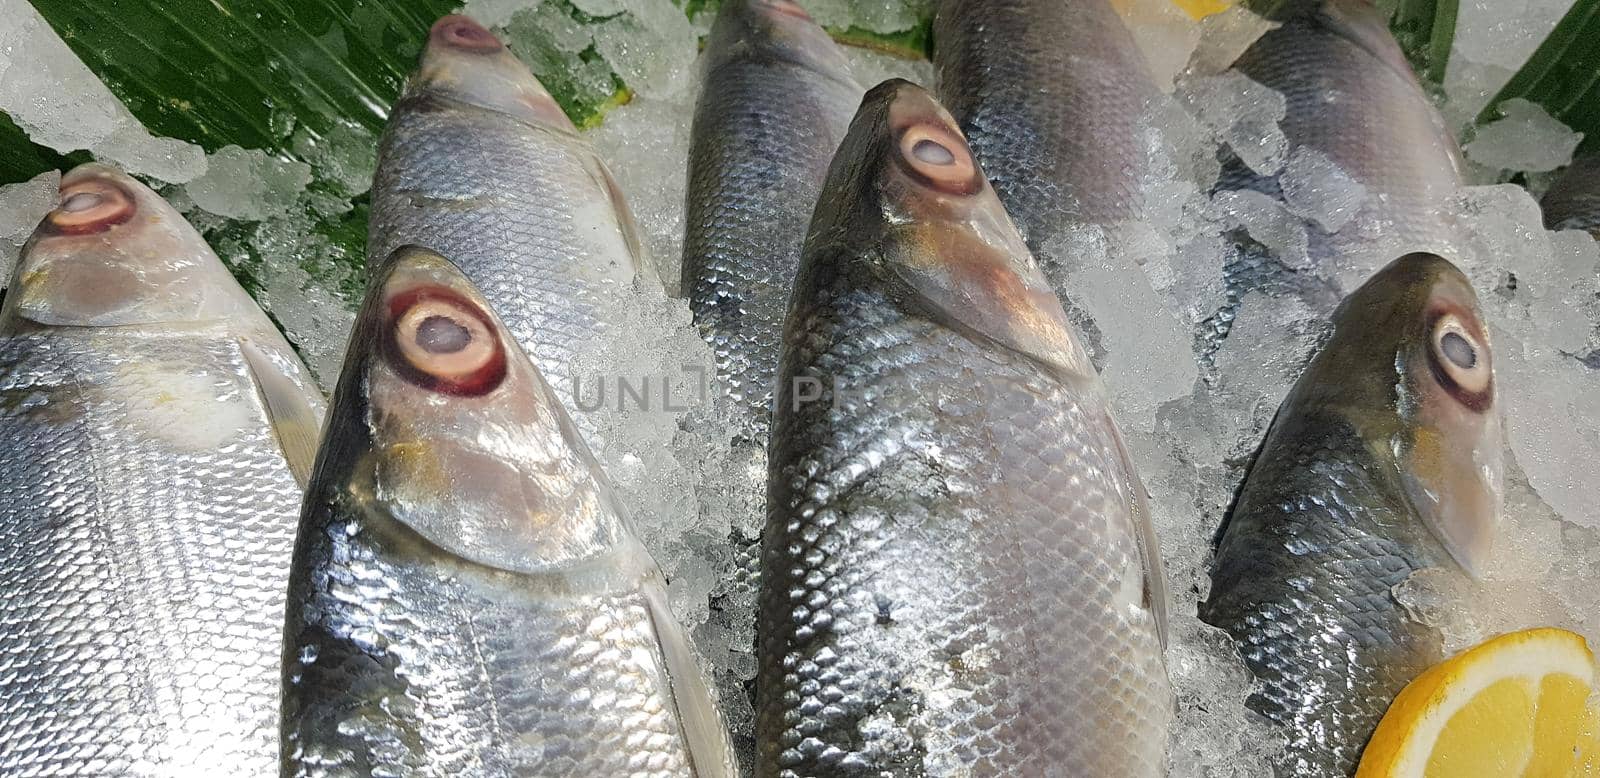 fresh milk fish or milkfish, Chanos chanos, Chanidae, Cretaceous, tautonym, awa, ava, bangús, bandeng, bolu, in the market